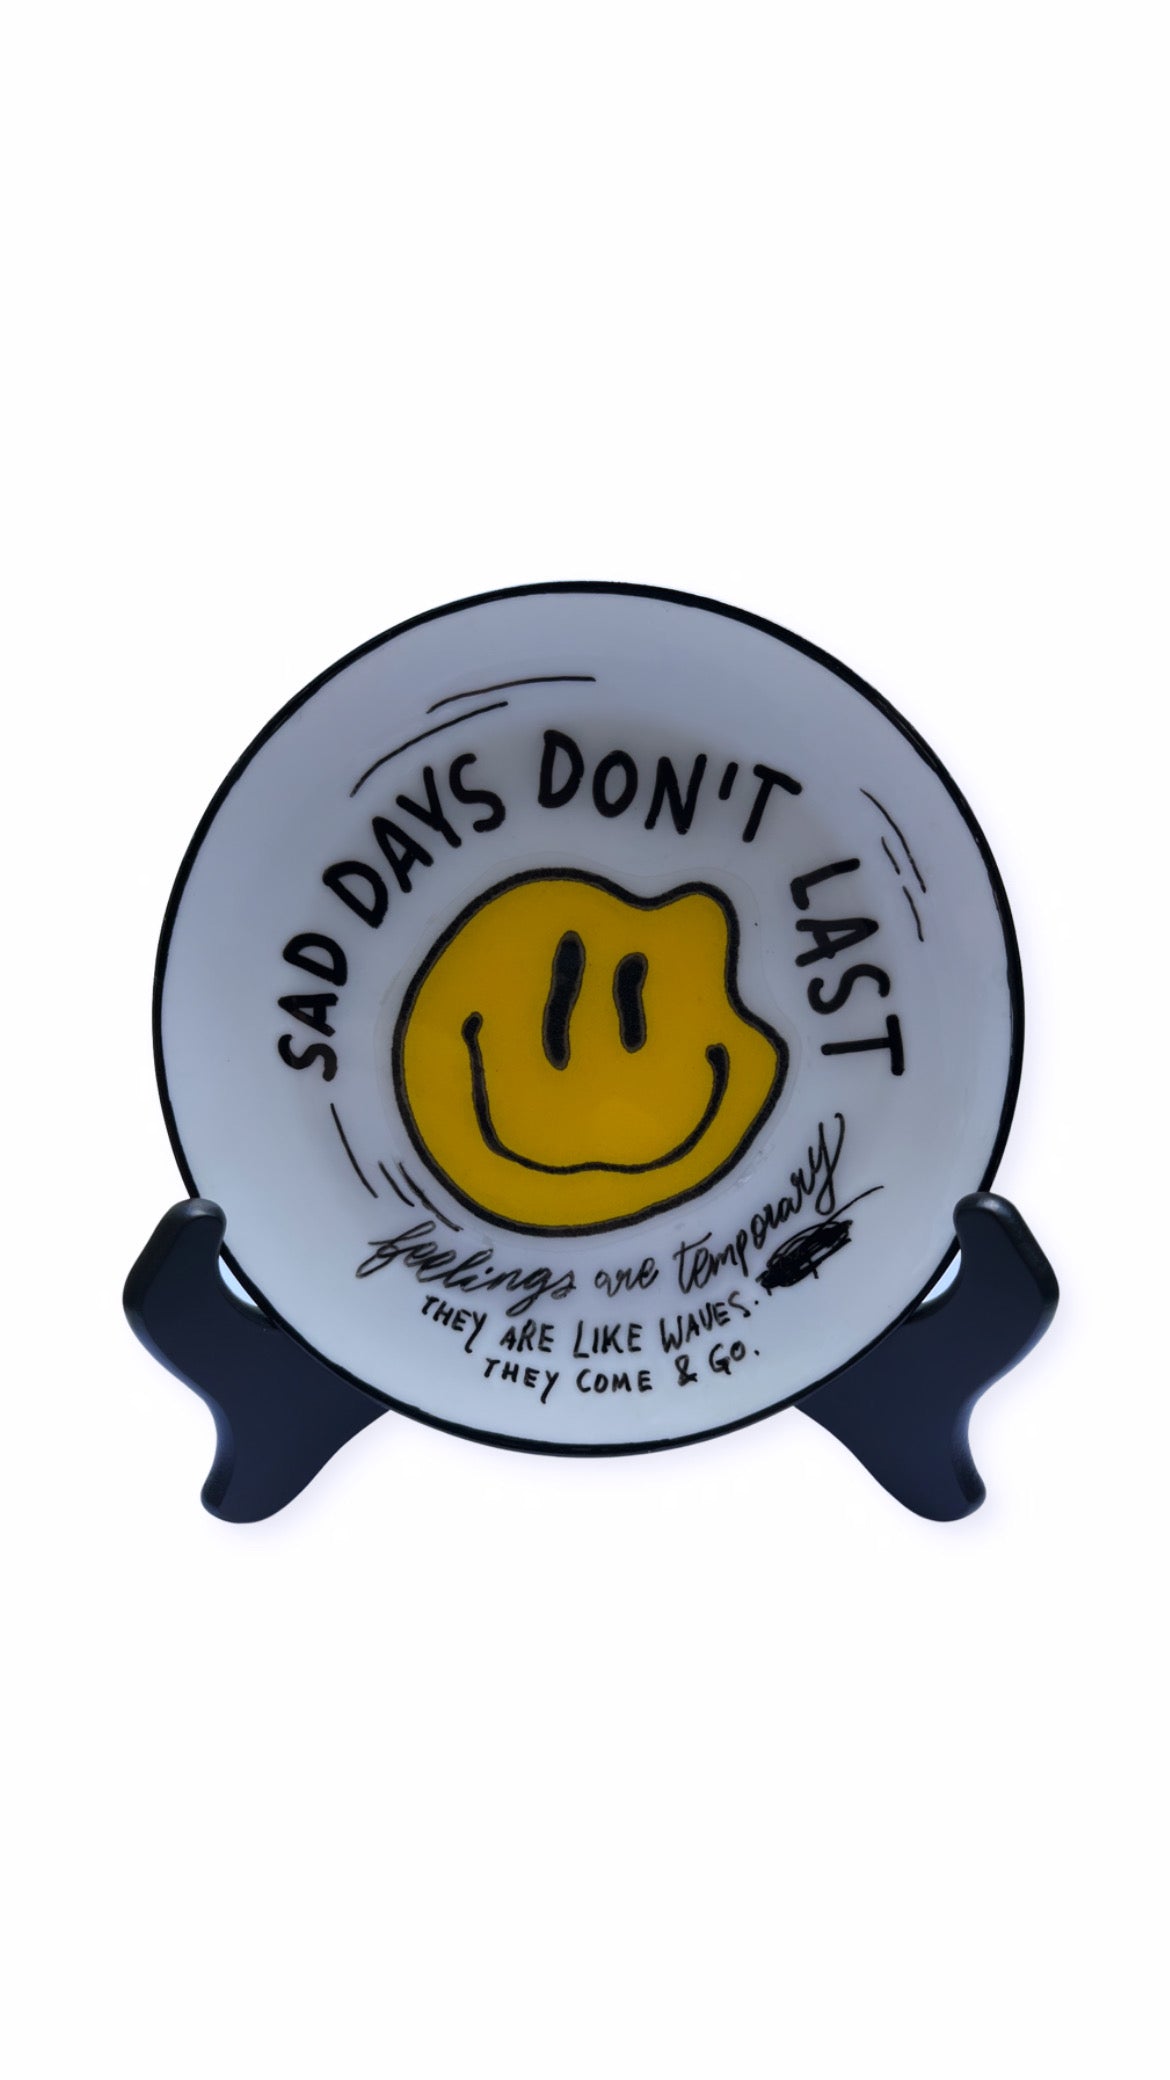 Sad Days Don’t Last Plate 1/6